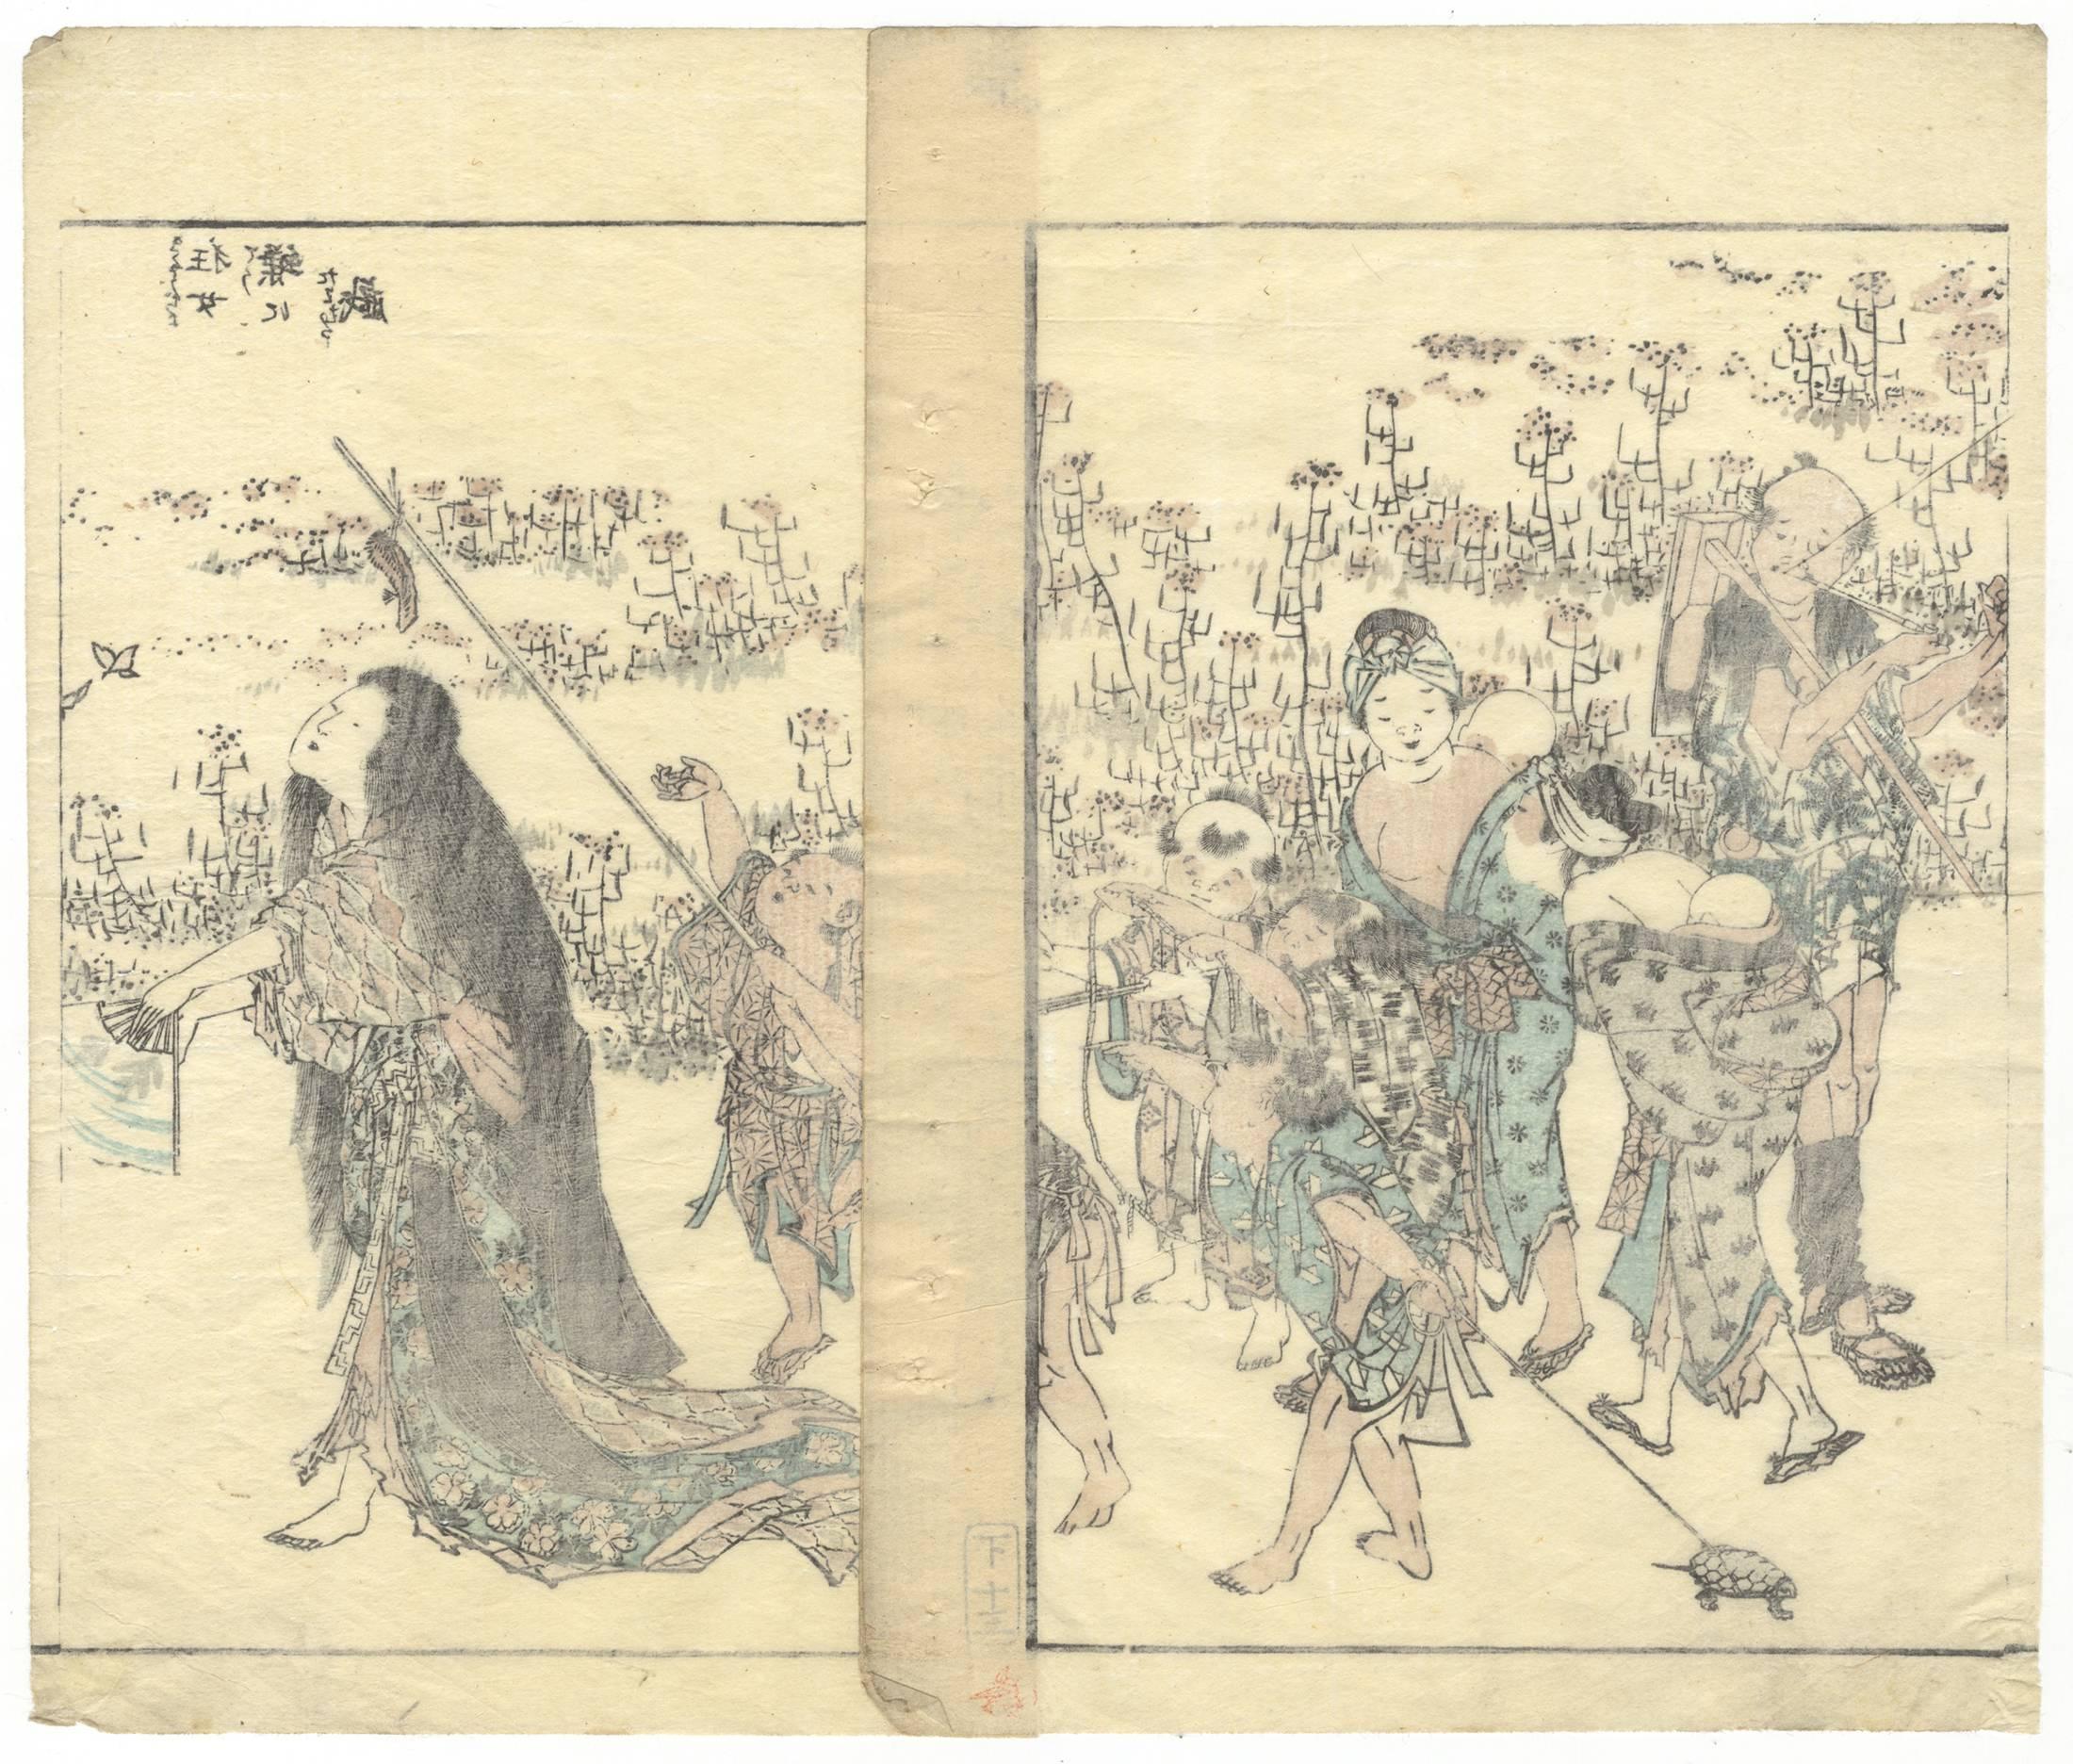 Hand-printed on traditional Japanese washi paper (mulberry tree paper).

Artist: Katsushika Hokusai
Title: Mad woman walking
Series: Hokusai Manga Volume
Publisher: Toheki-do
Published: 1814-1878

This print shows a disheveled woman leading a